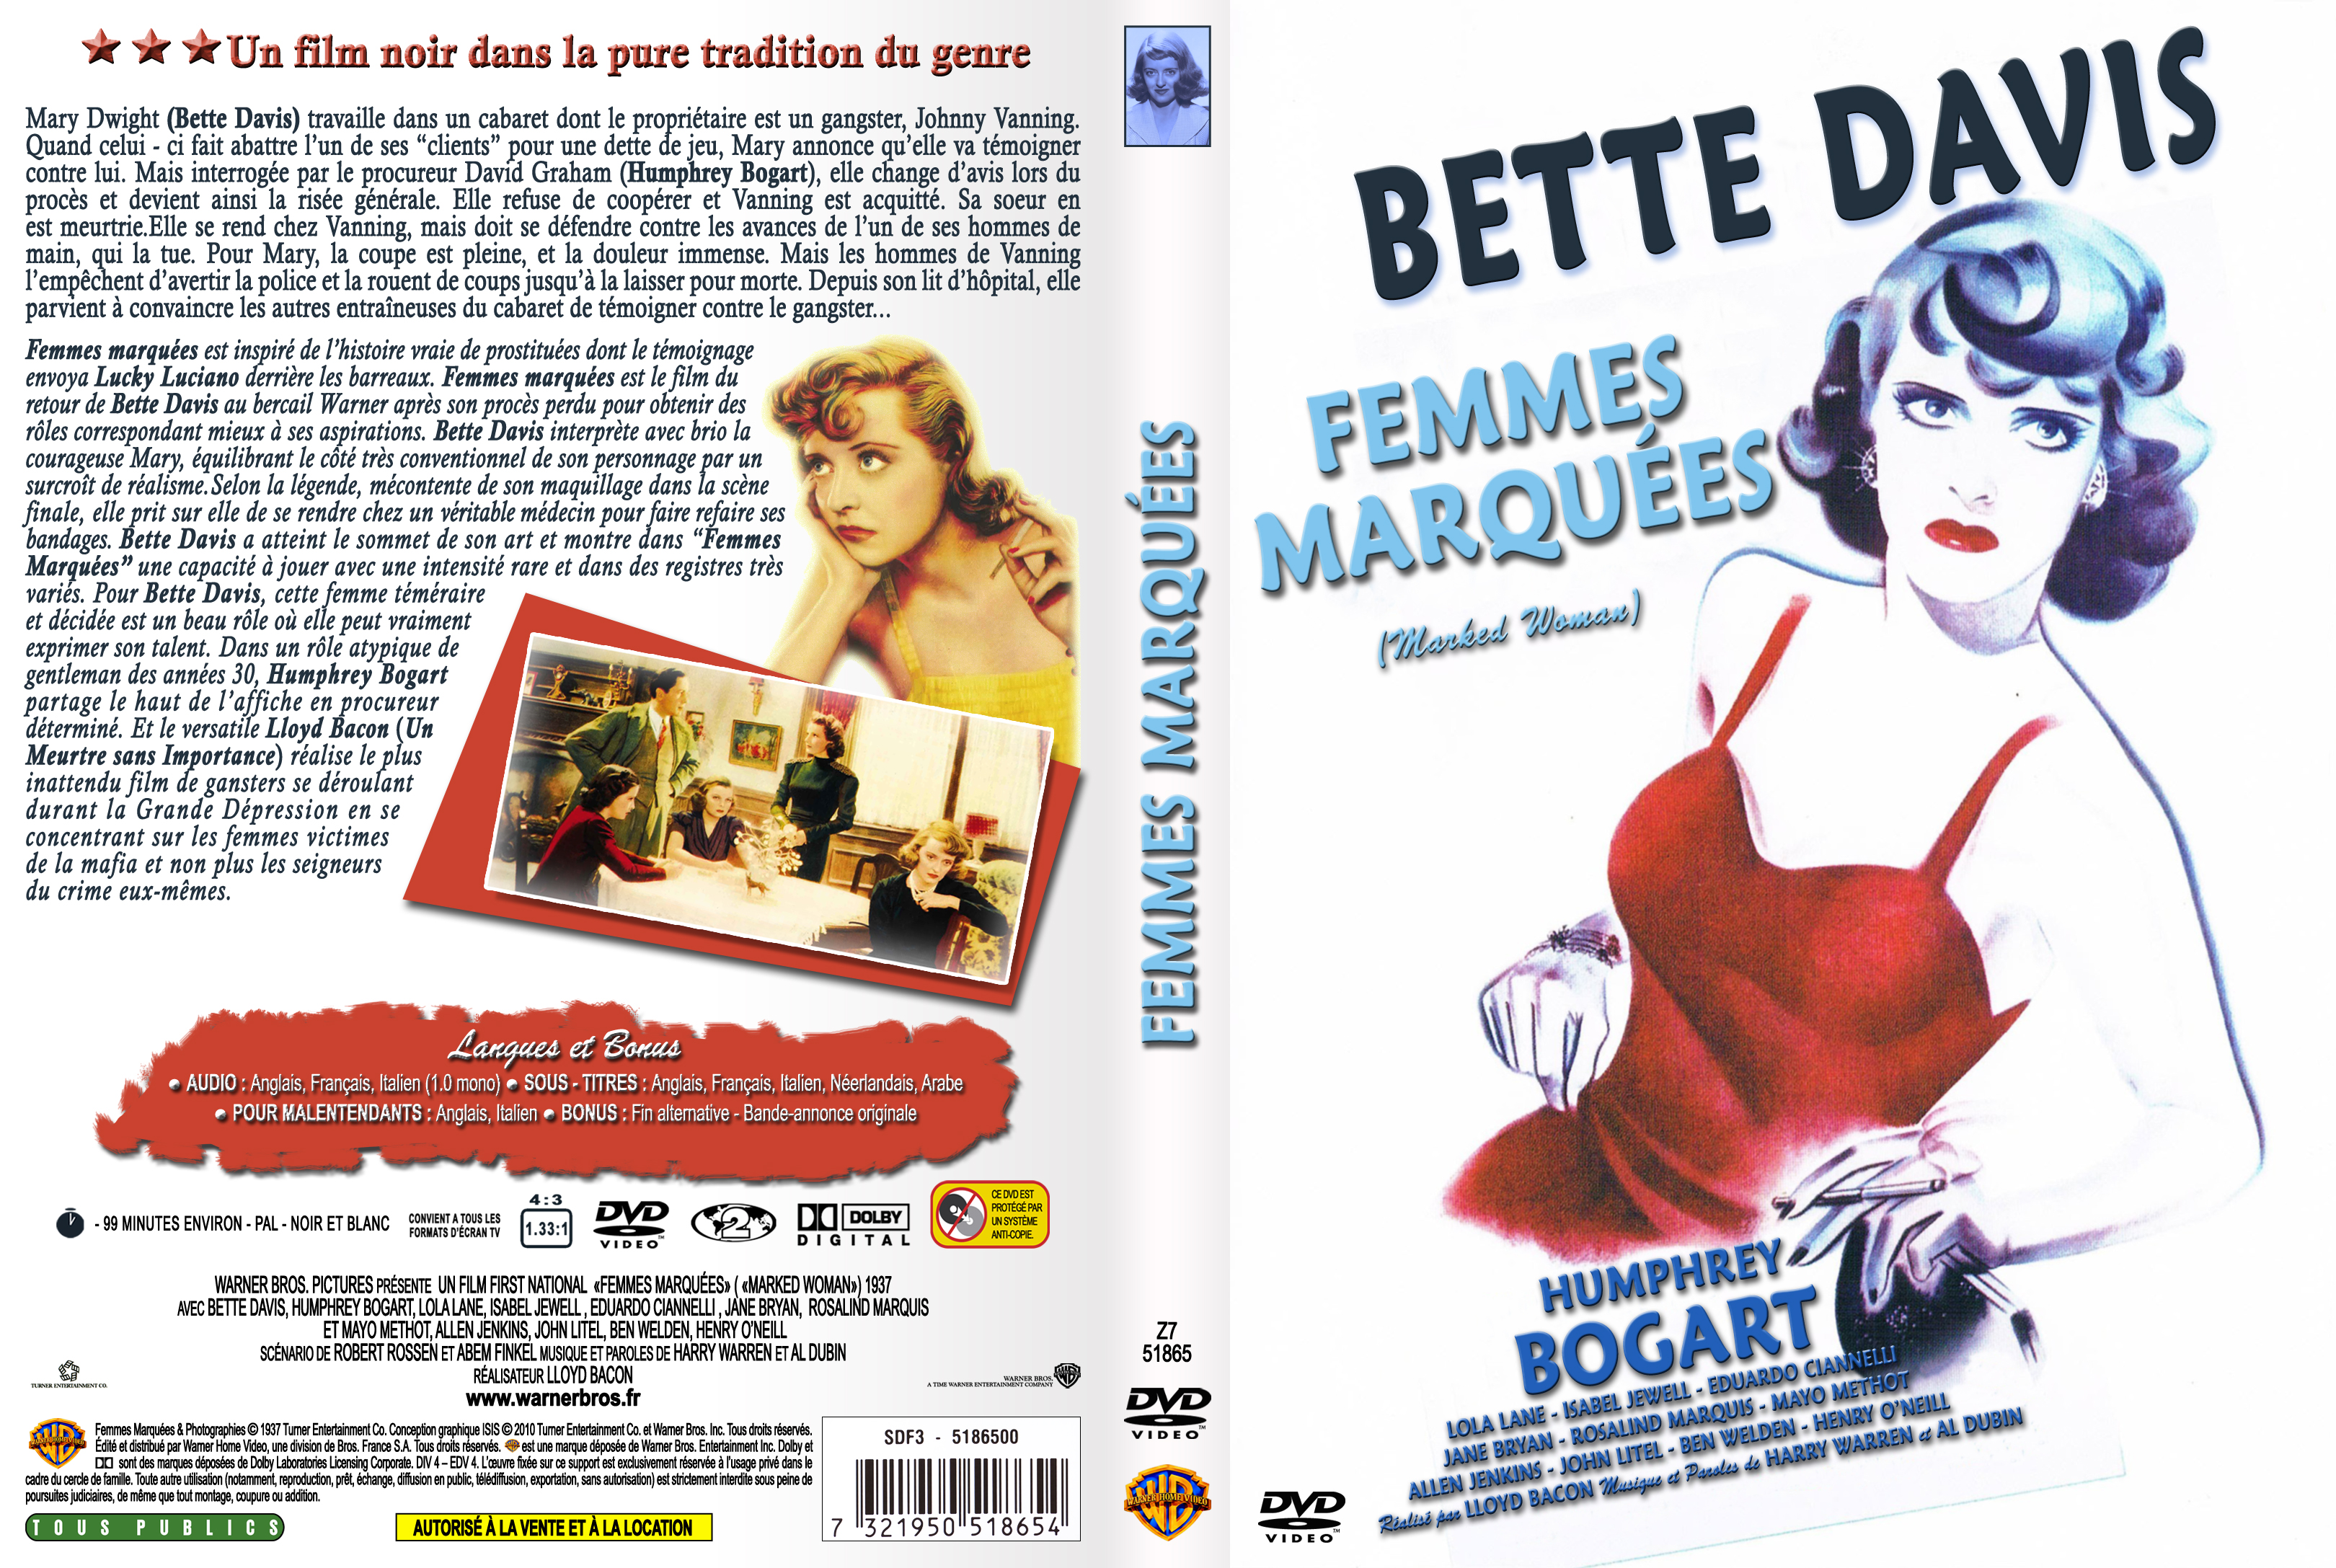 Jaquette DVD Femmes marques custom